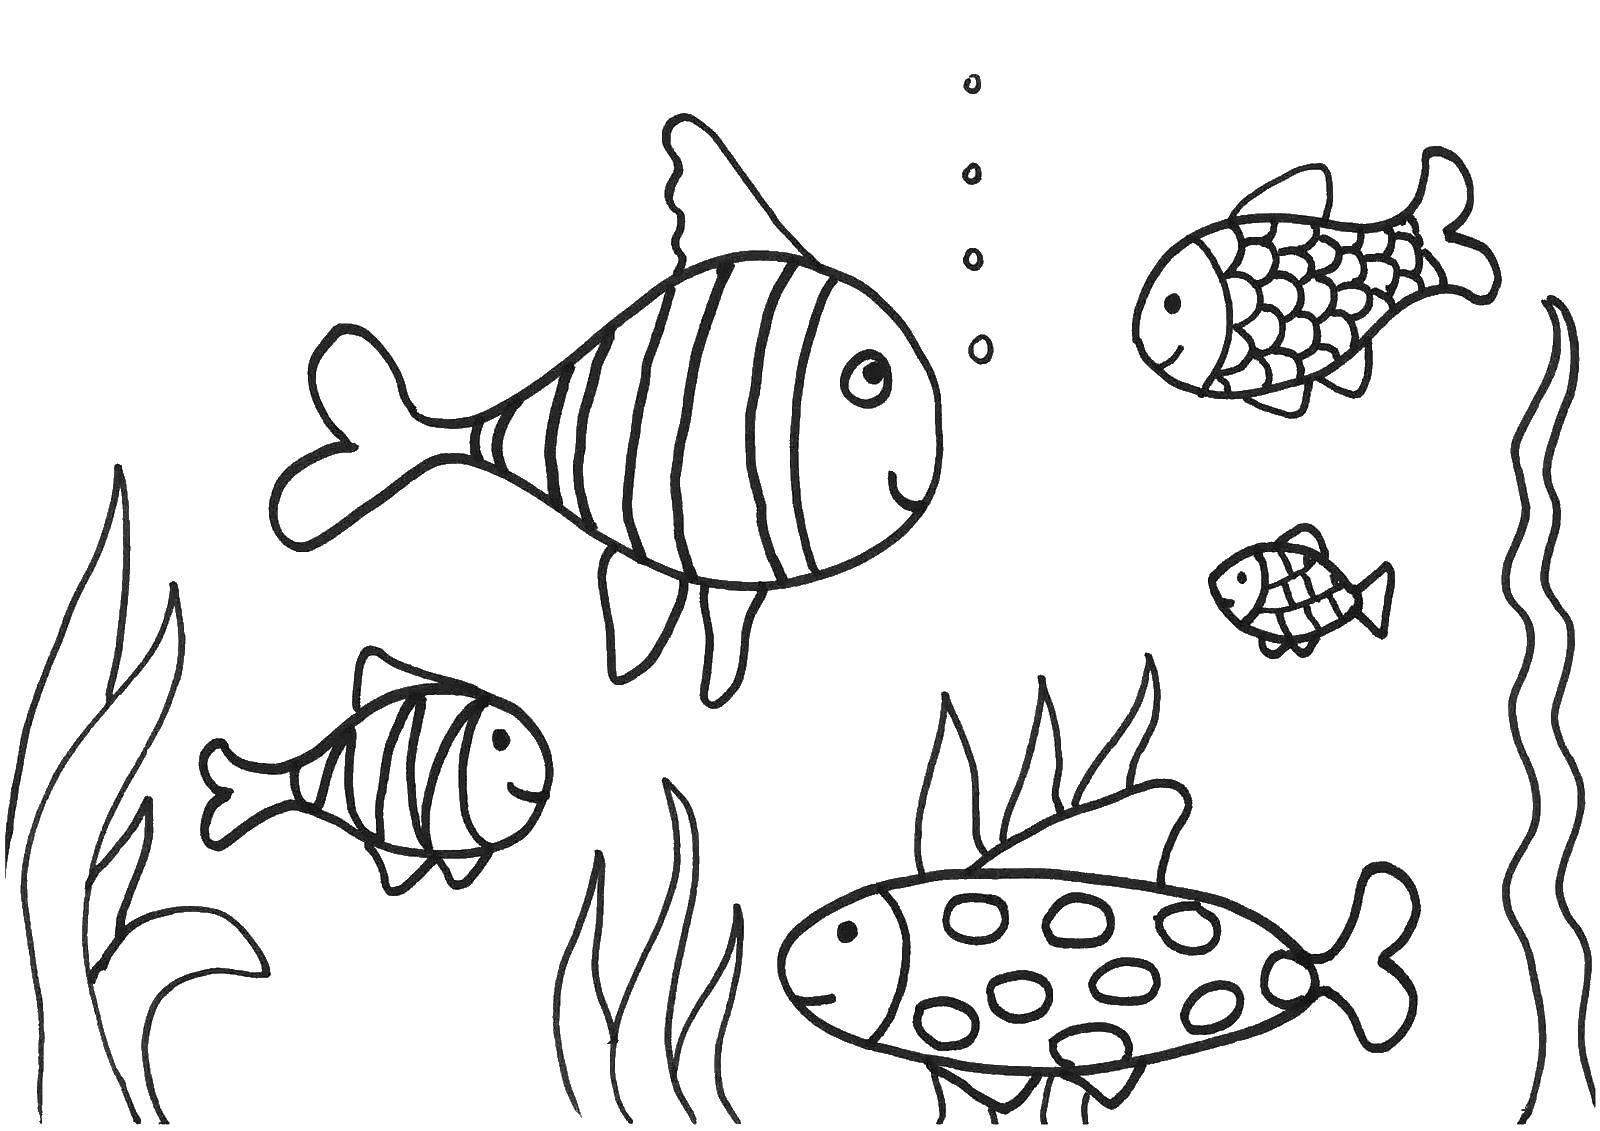 Coloring Fish. Category Fish. Tags:  fish, sea, water, algae.